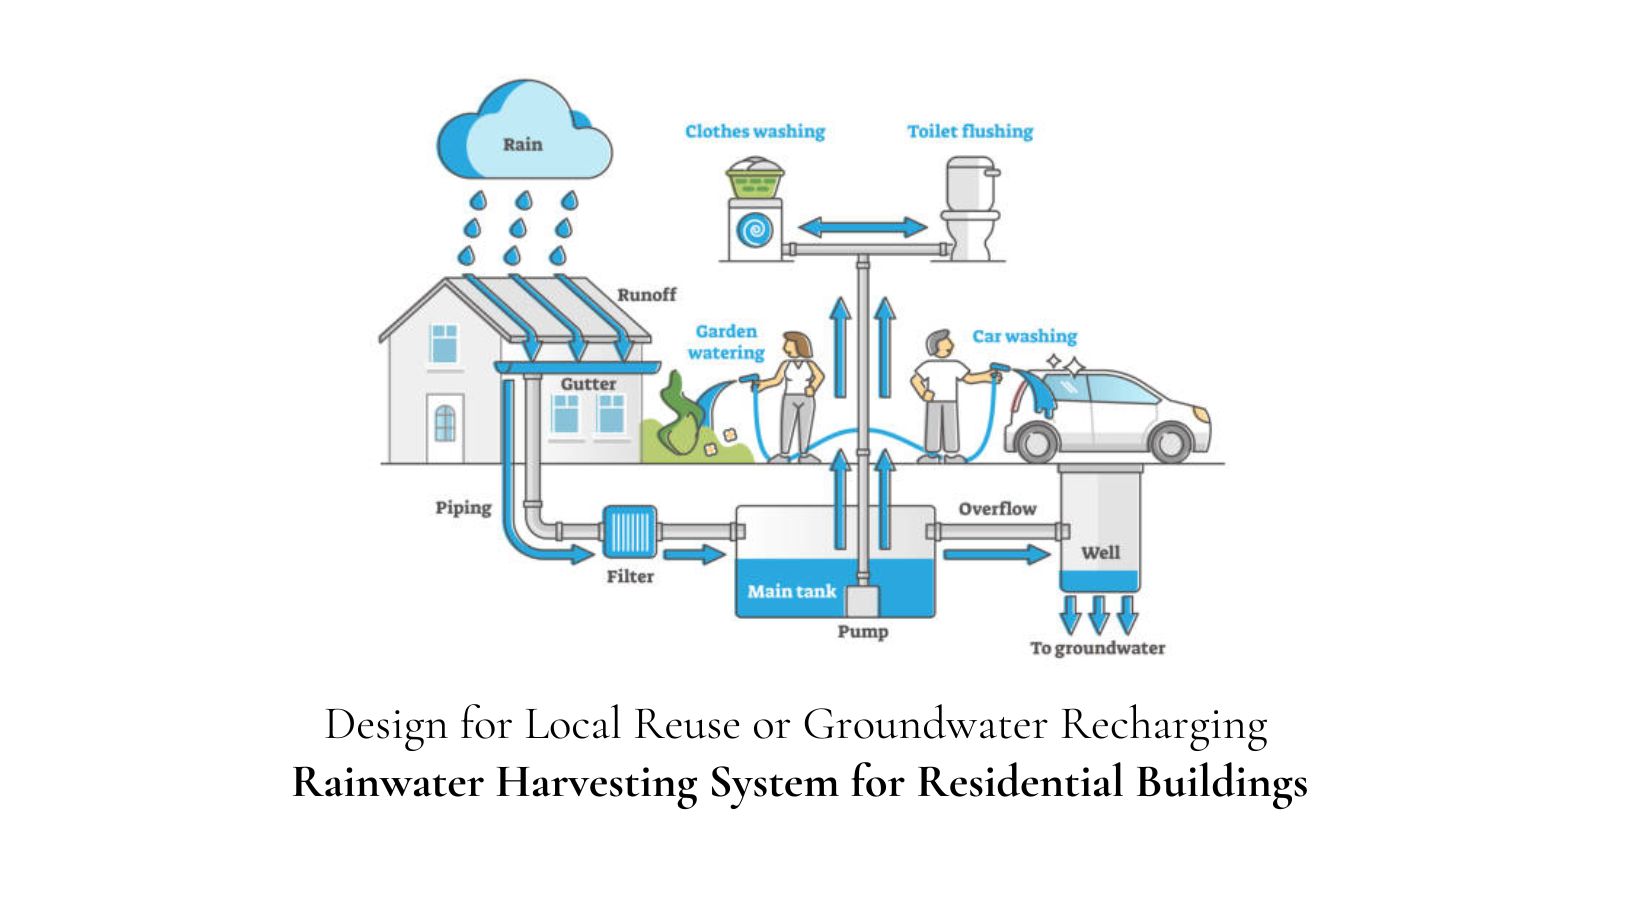 Rainwater harvesting for residential buildings